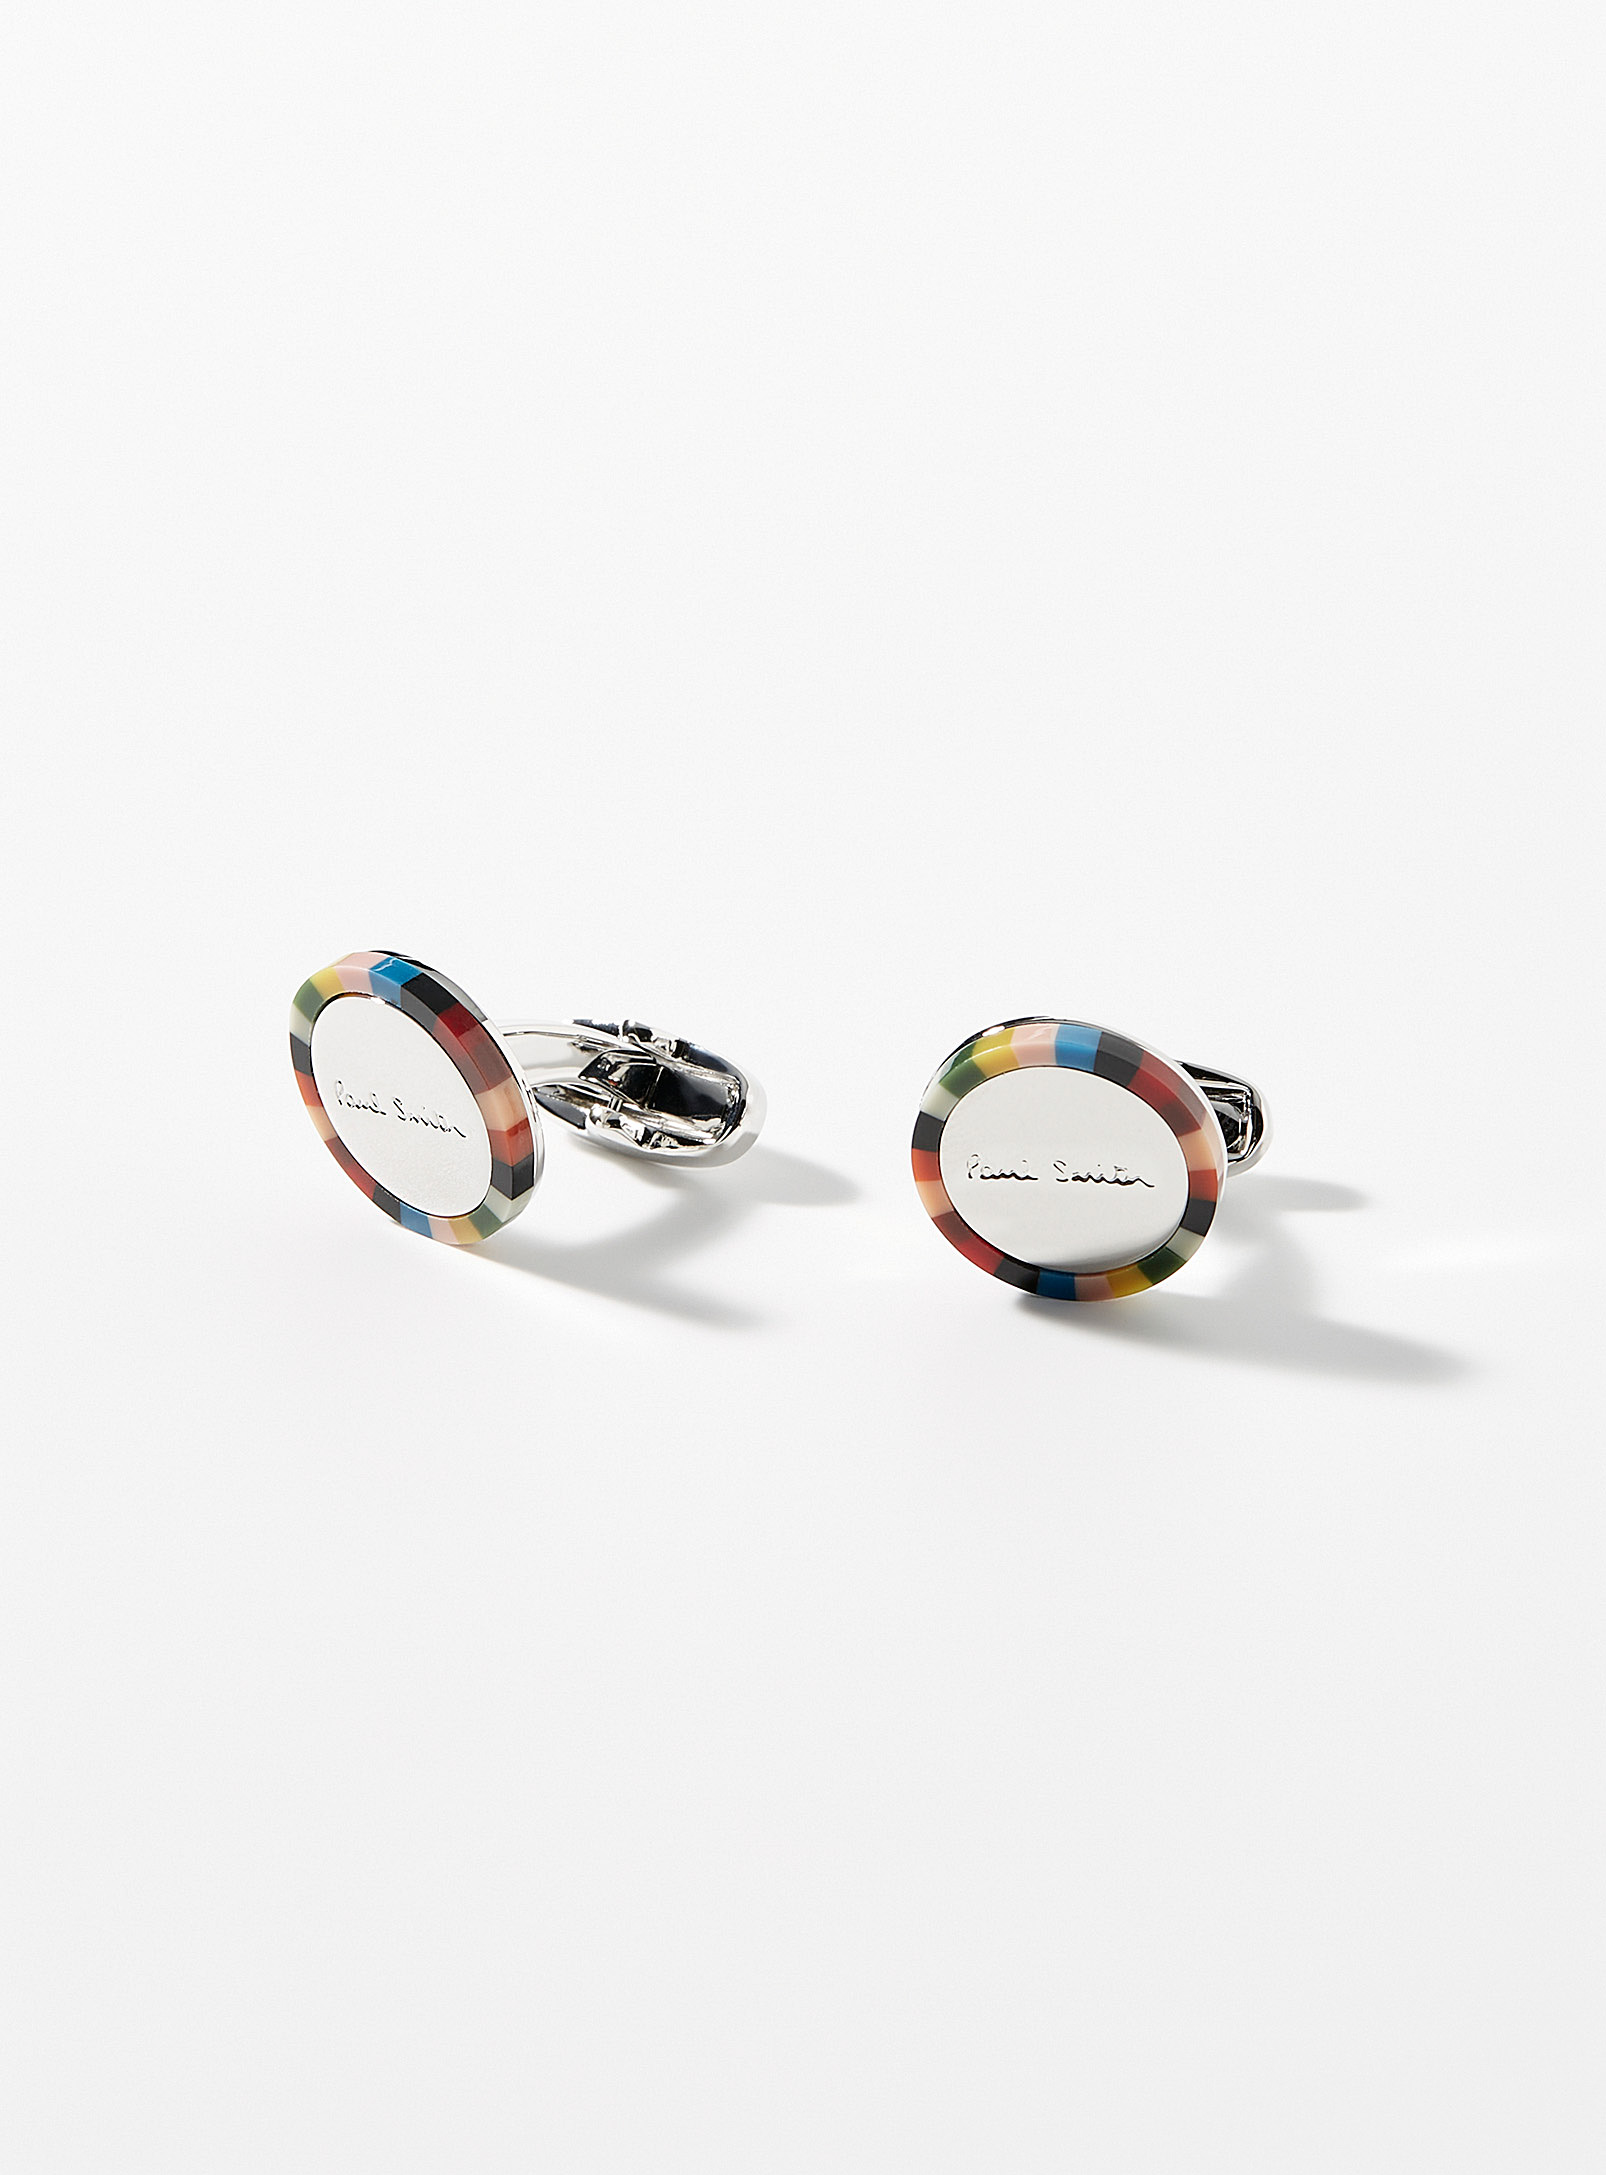 Paul Smith - Men's Colourful circular cufflinks